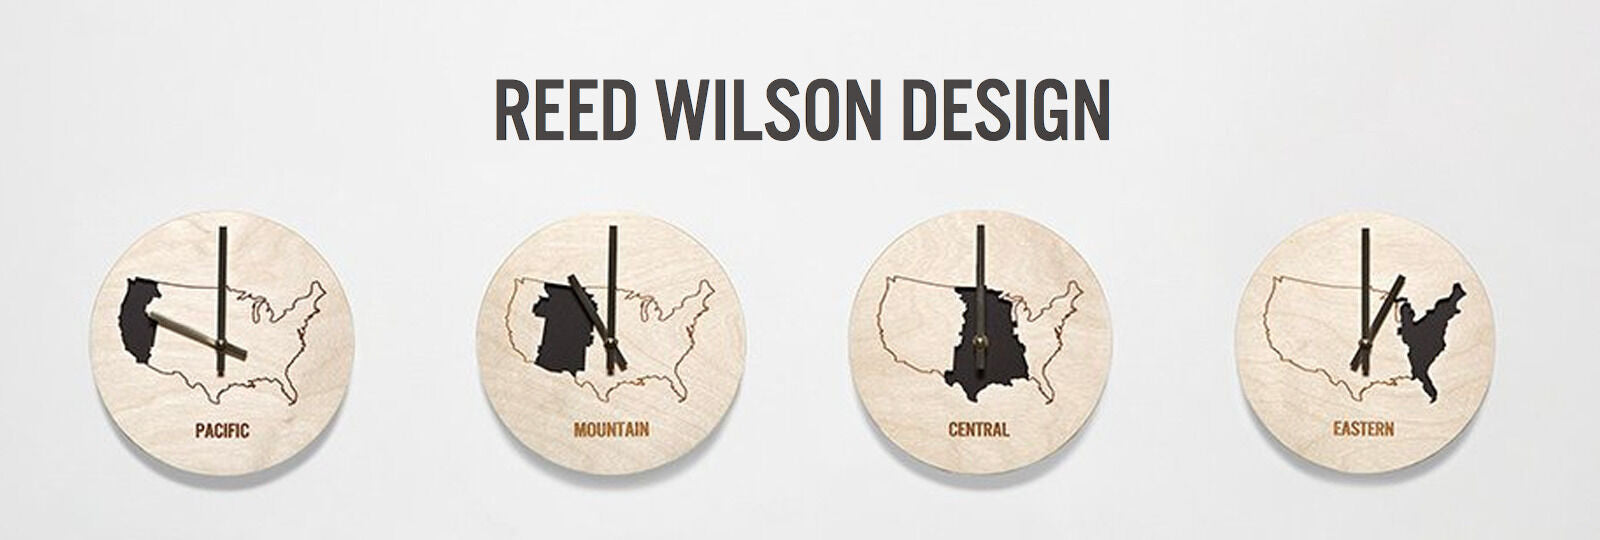 Reed Wilson Design